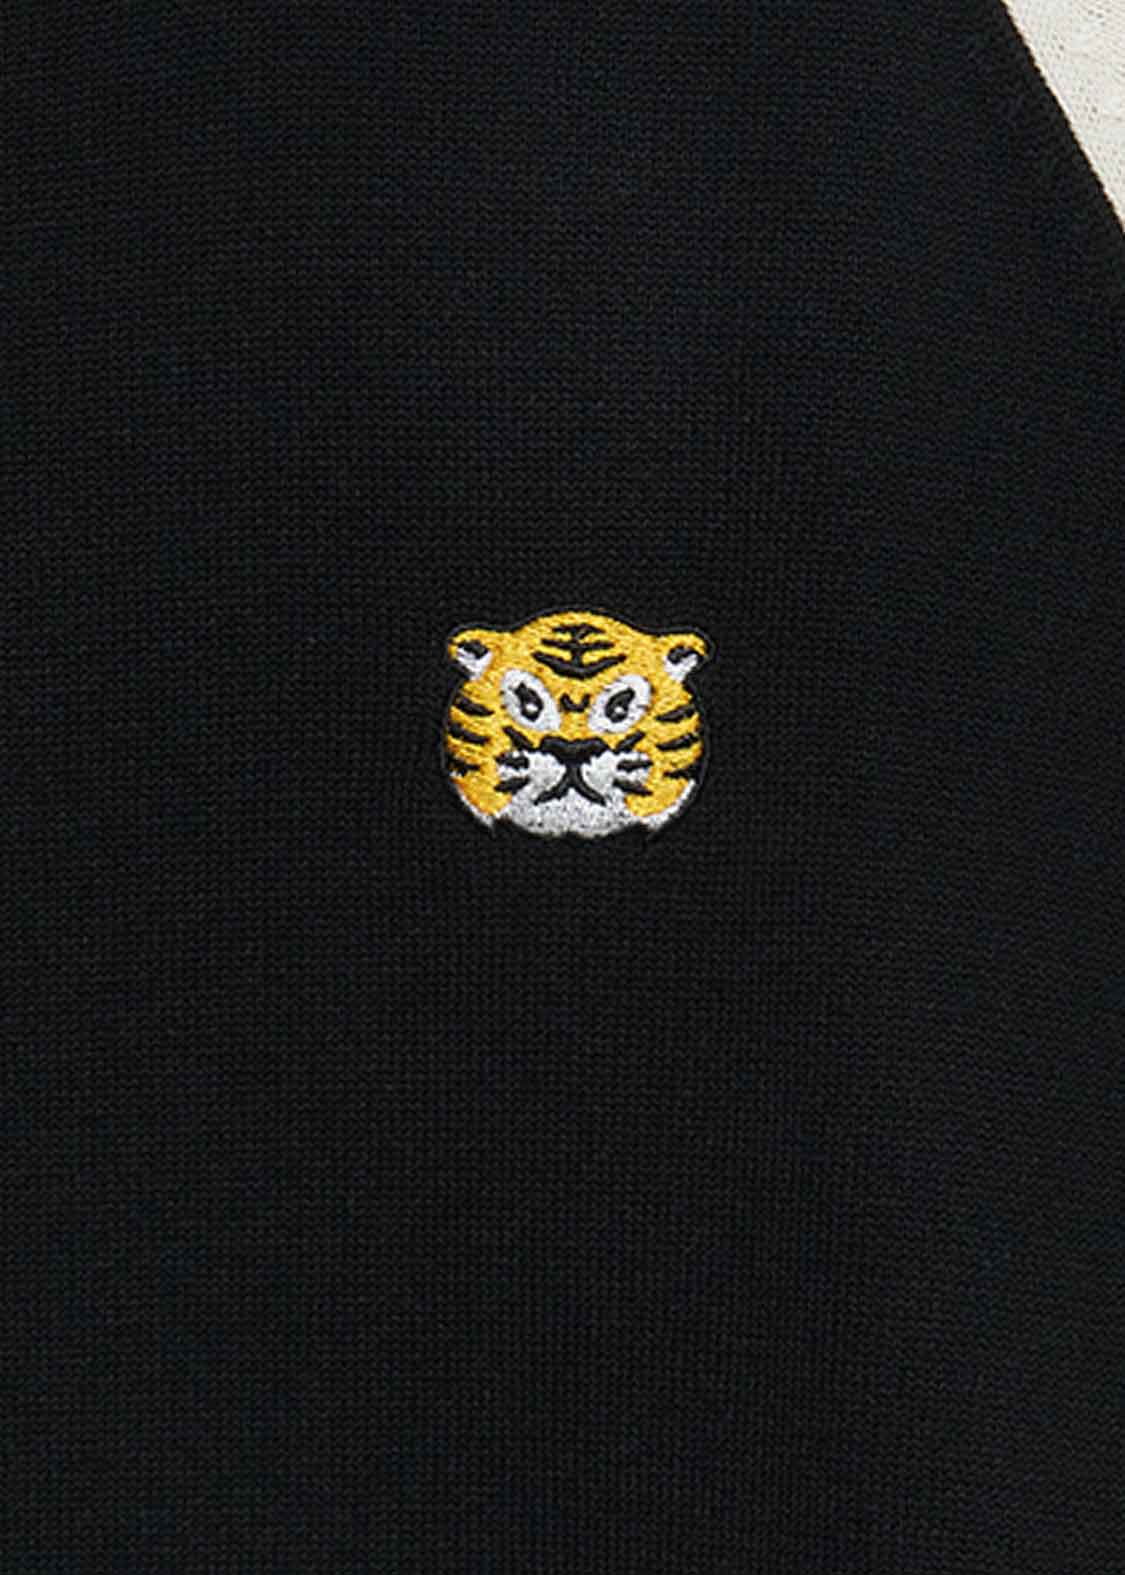 Raglan Sleeve Knit One-Piece (Awesome Tiger)